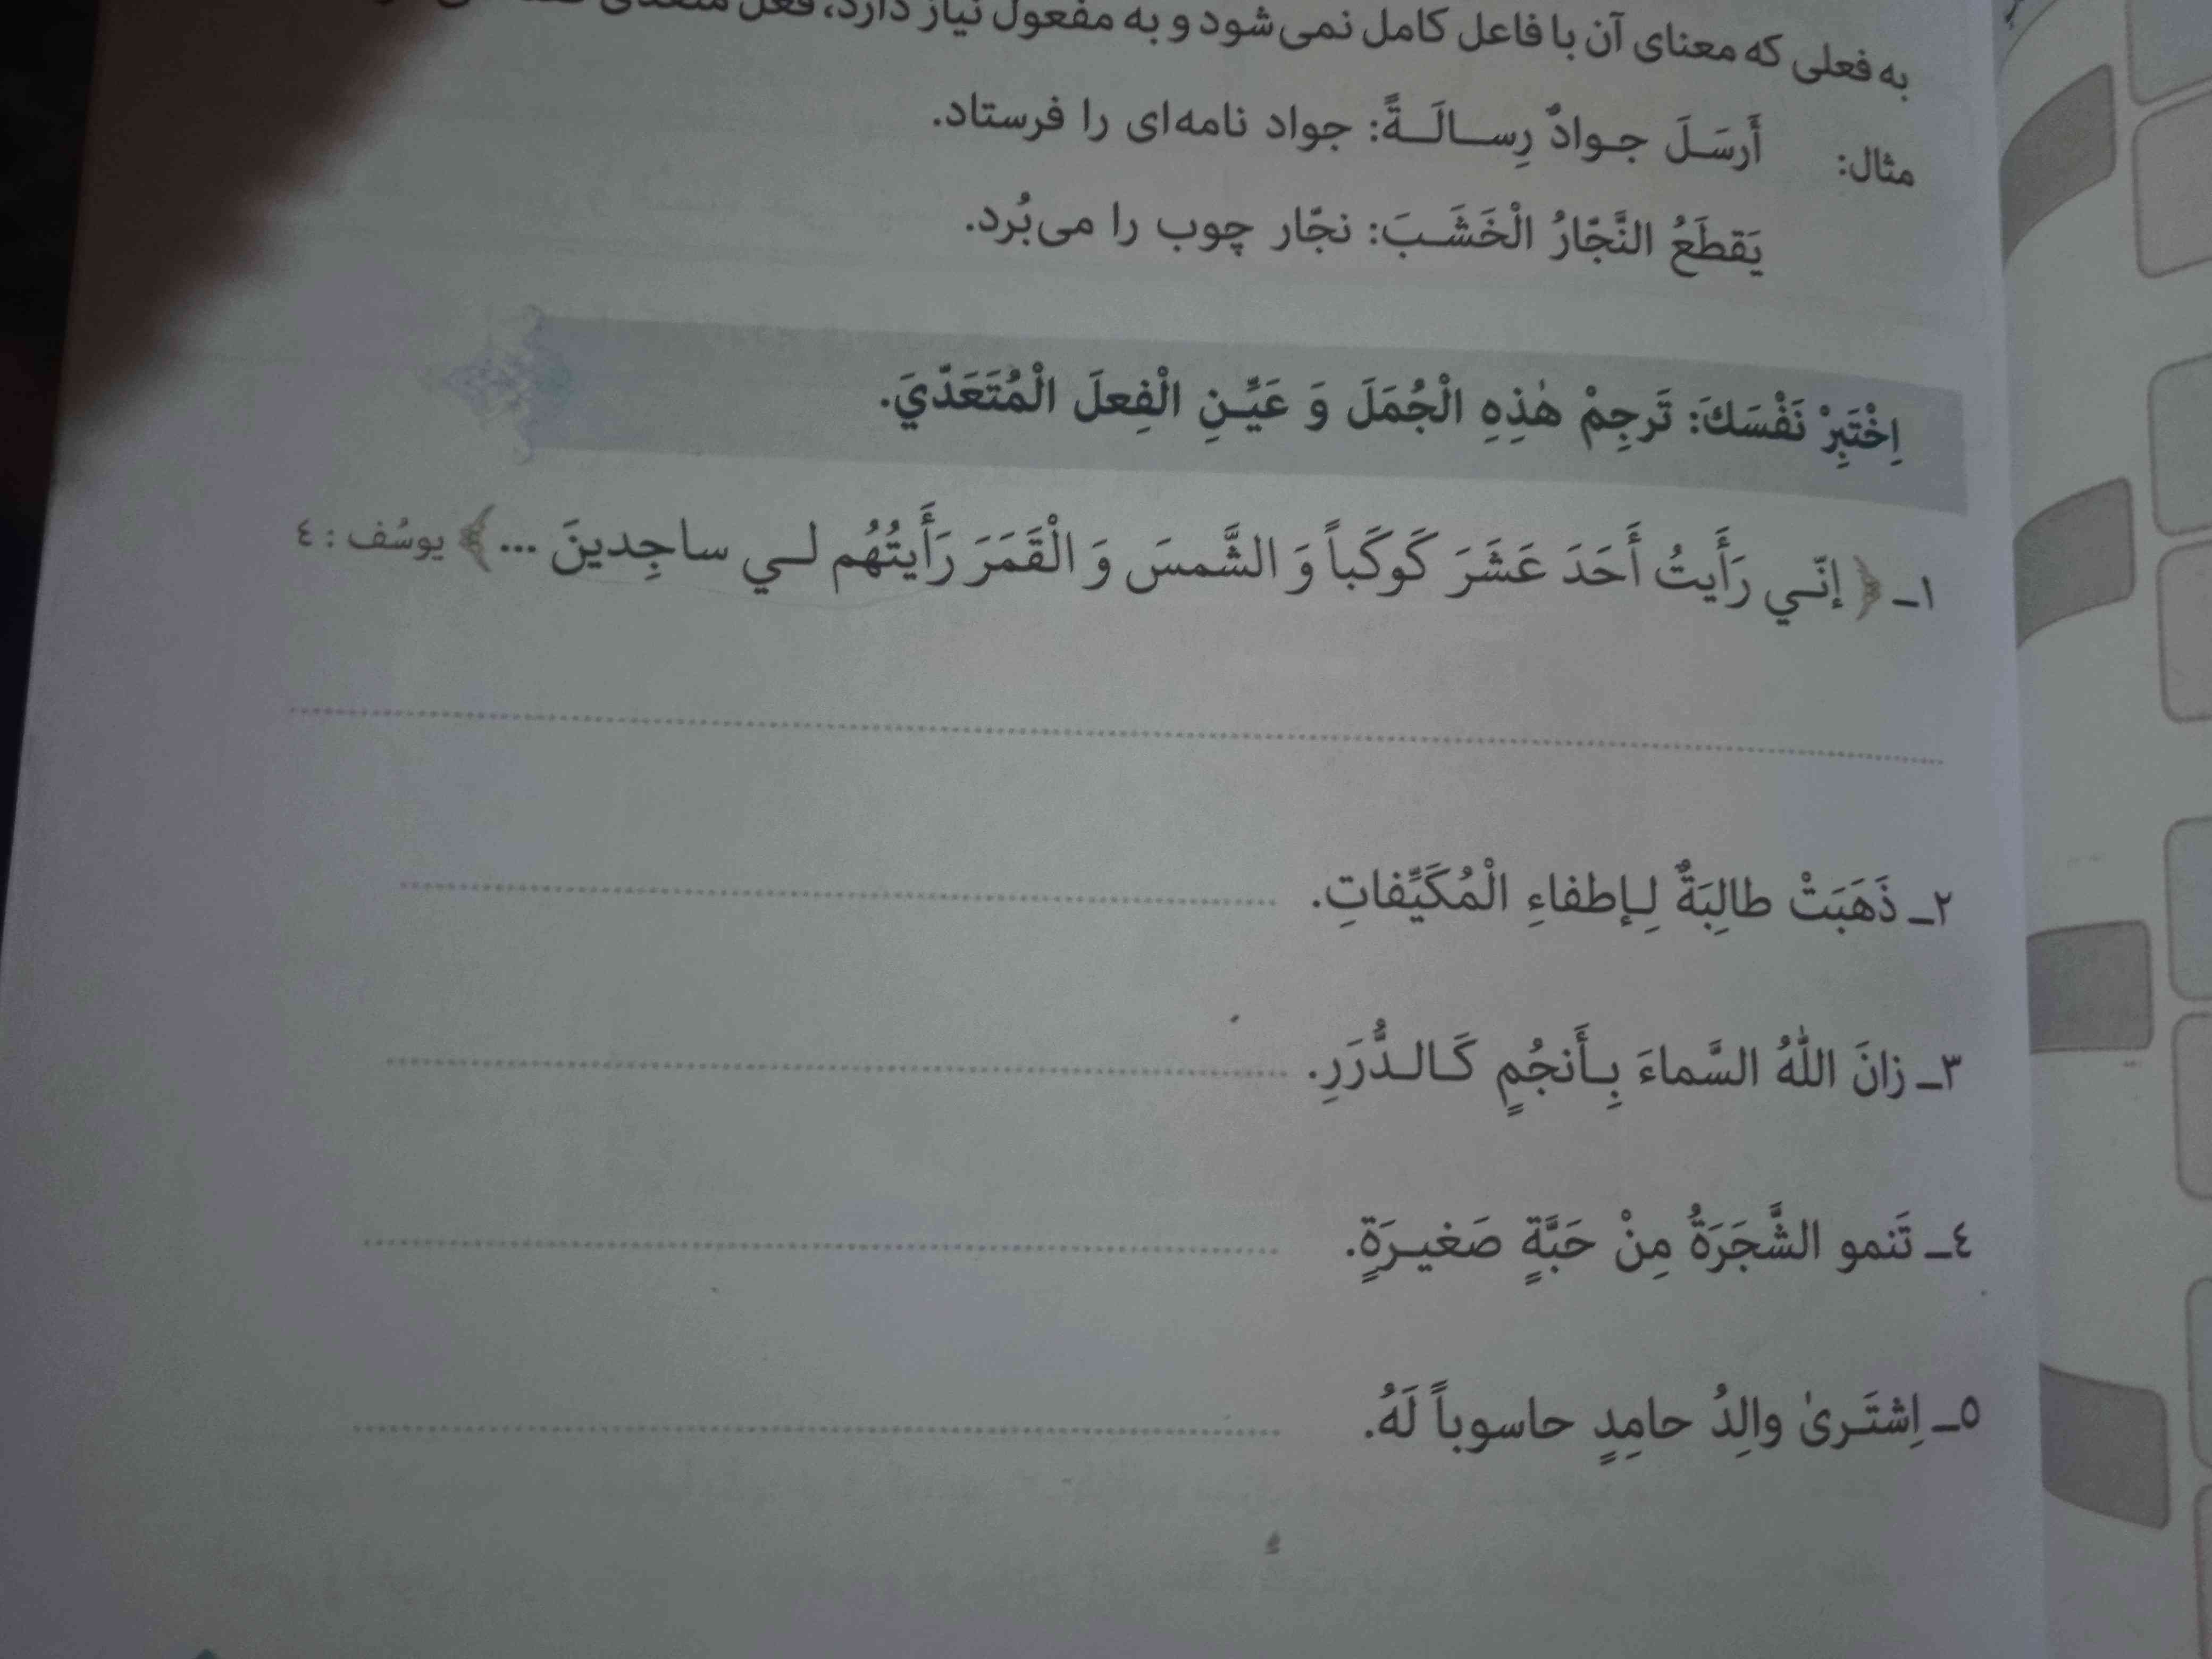 سلام دوستان کسی صفحه ۲۹ عربی رو حل کردین هر کی حل کرده بفرسته ممنون میشم